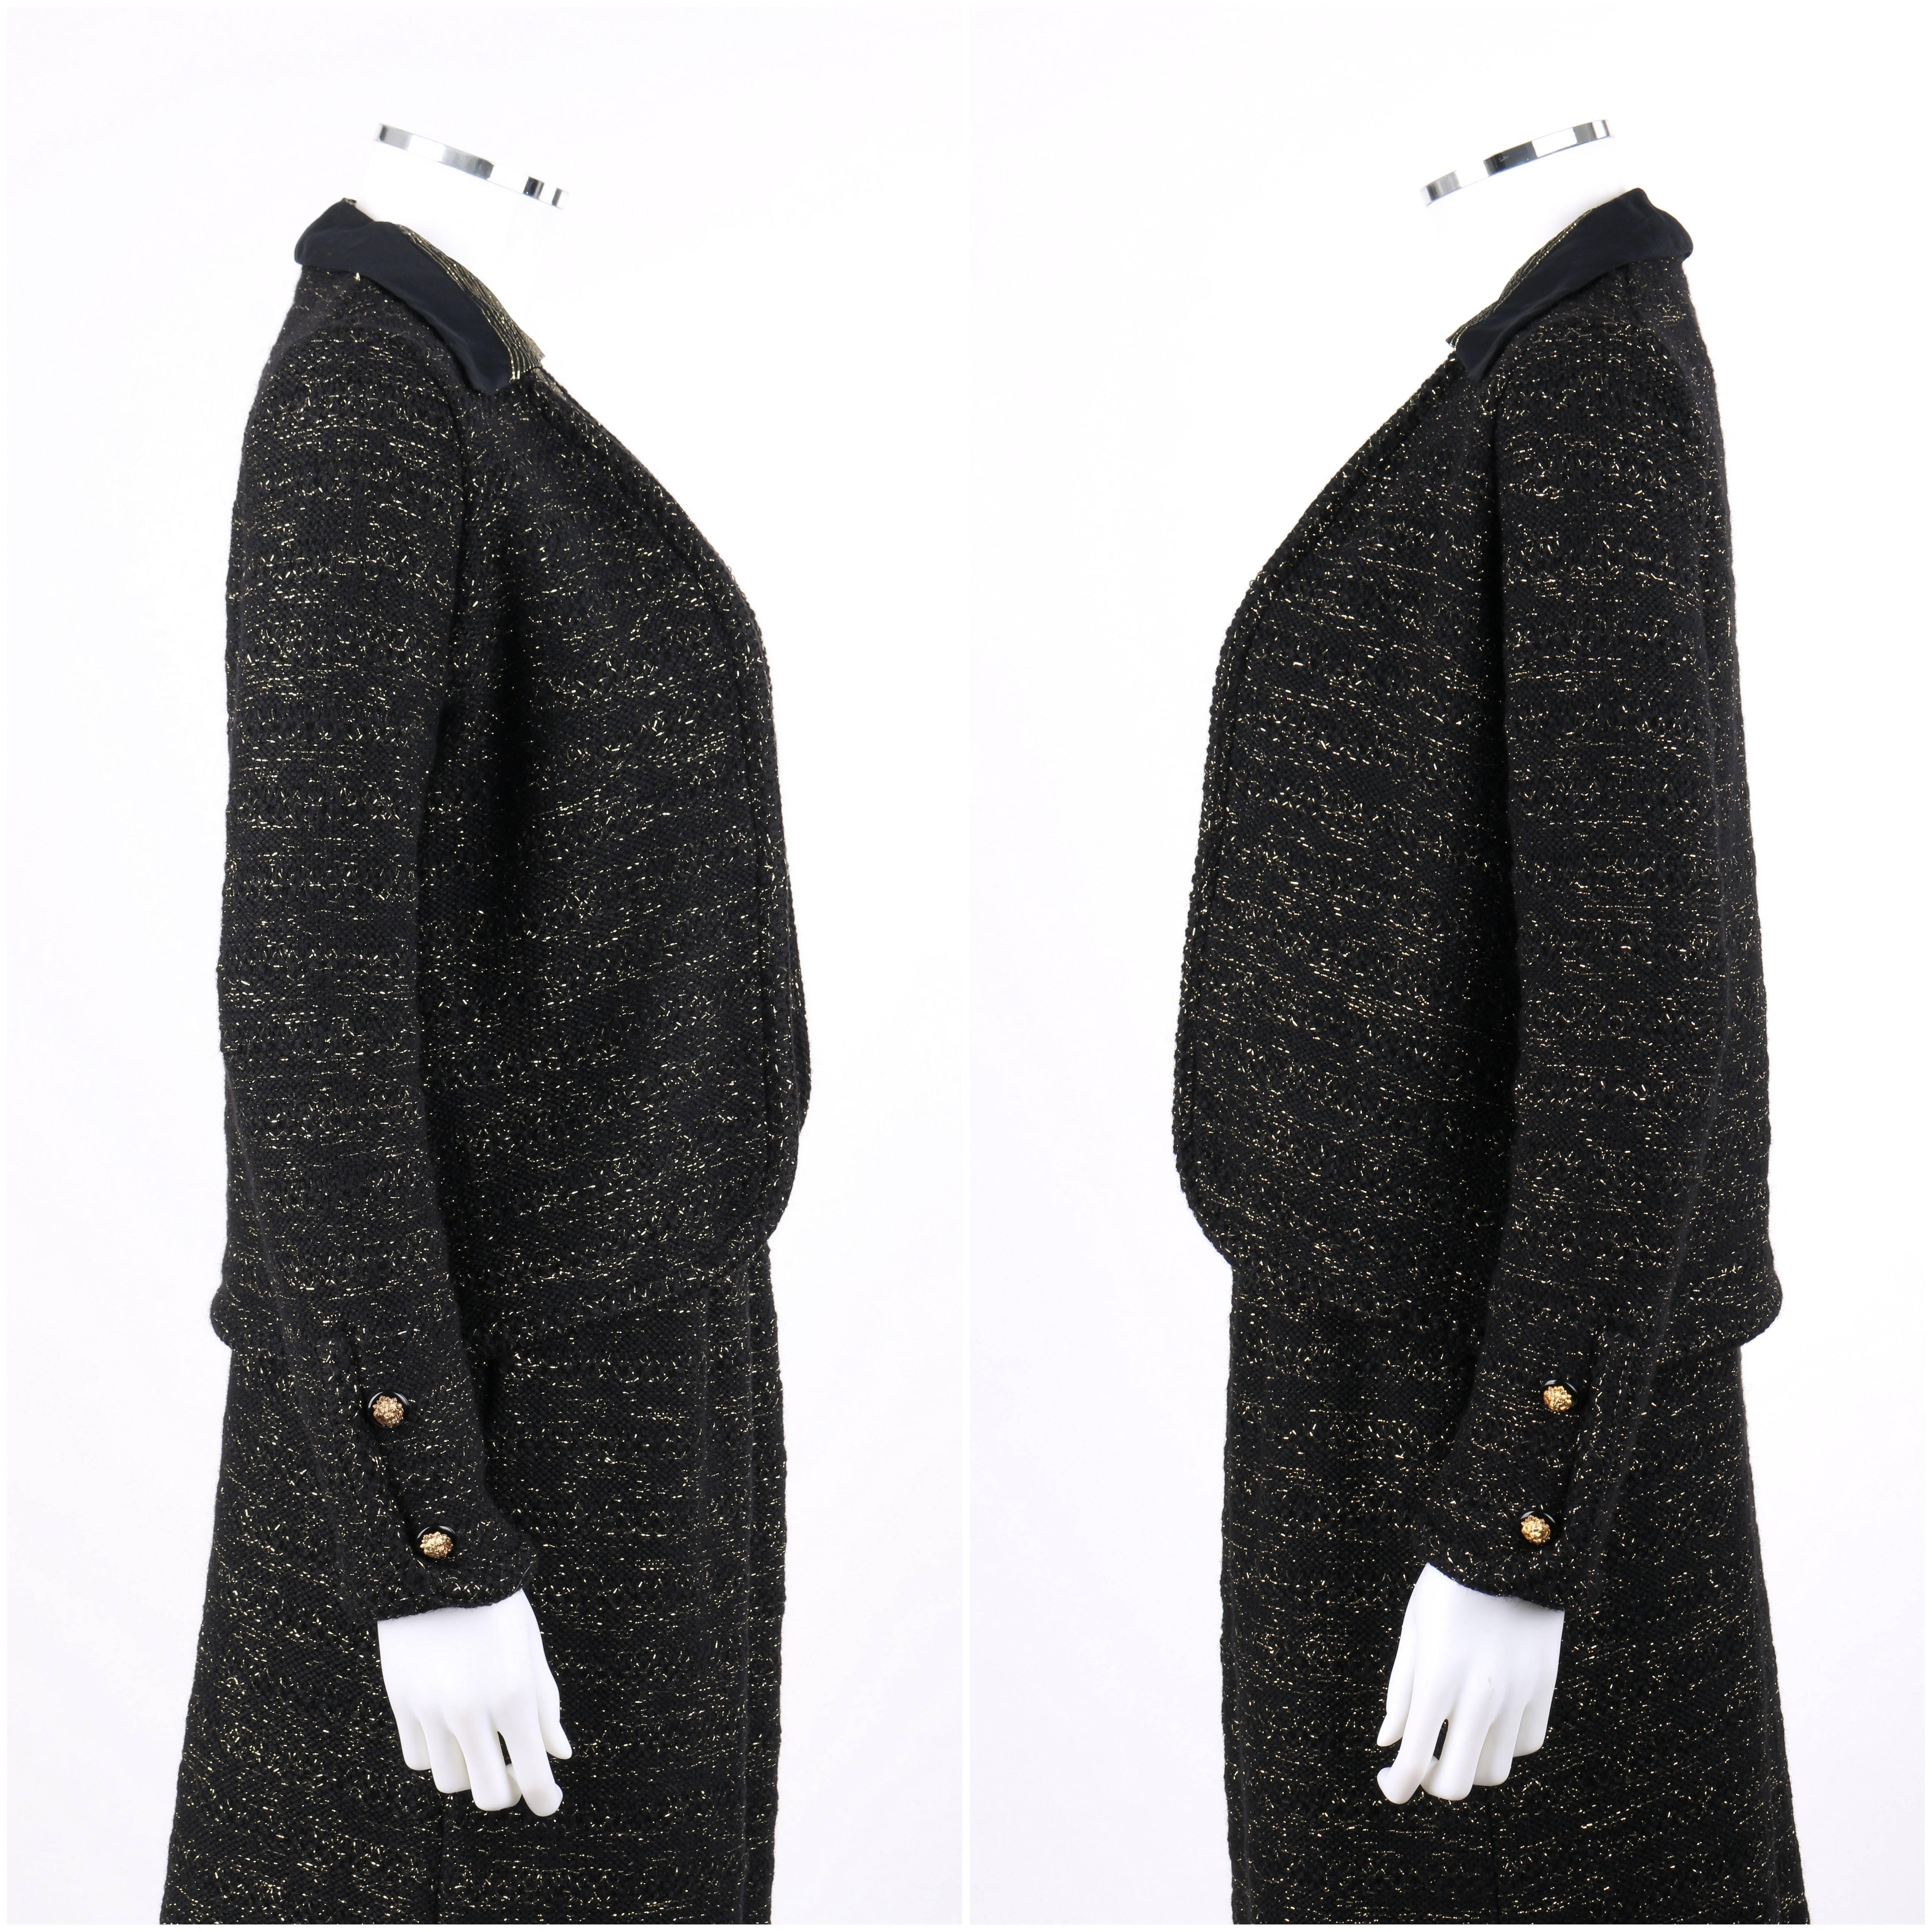 Black CHANEL Creations c.1970s 4 Pc Wool & Lurex Jacket Blouse Skirt Suit Set w/ Scarf